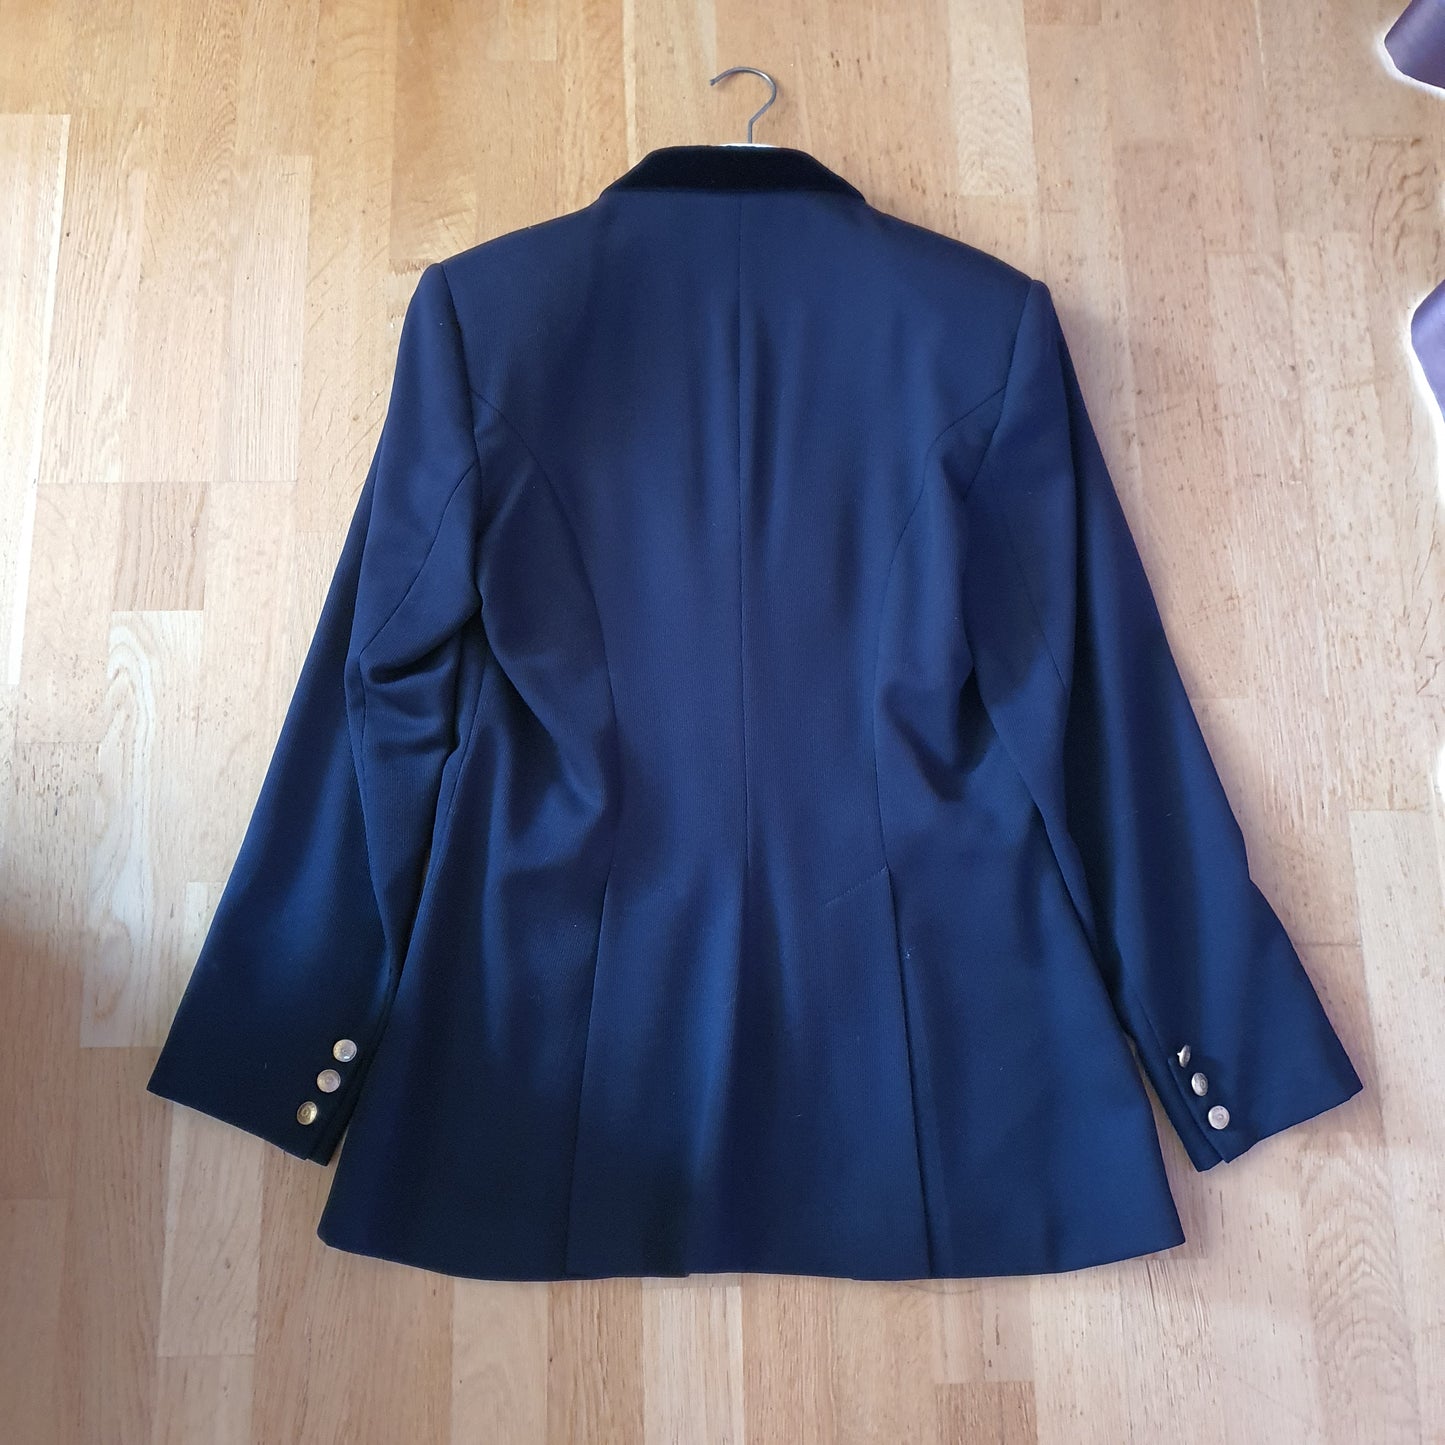 K Ritchie navy show jacket ladies size 14